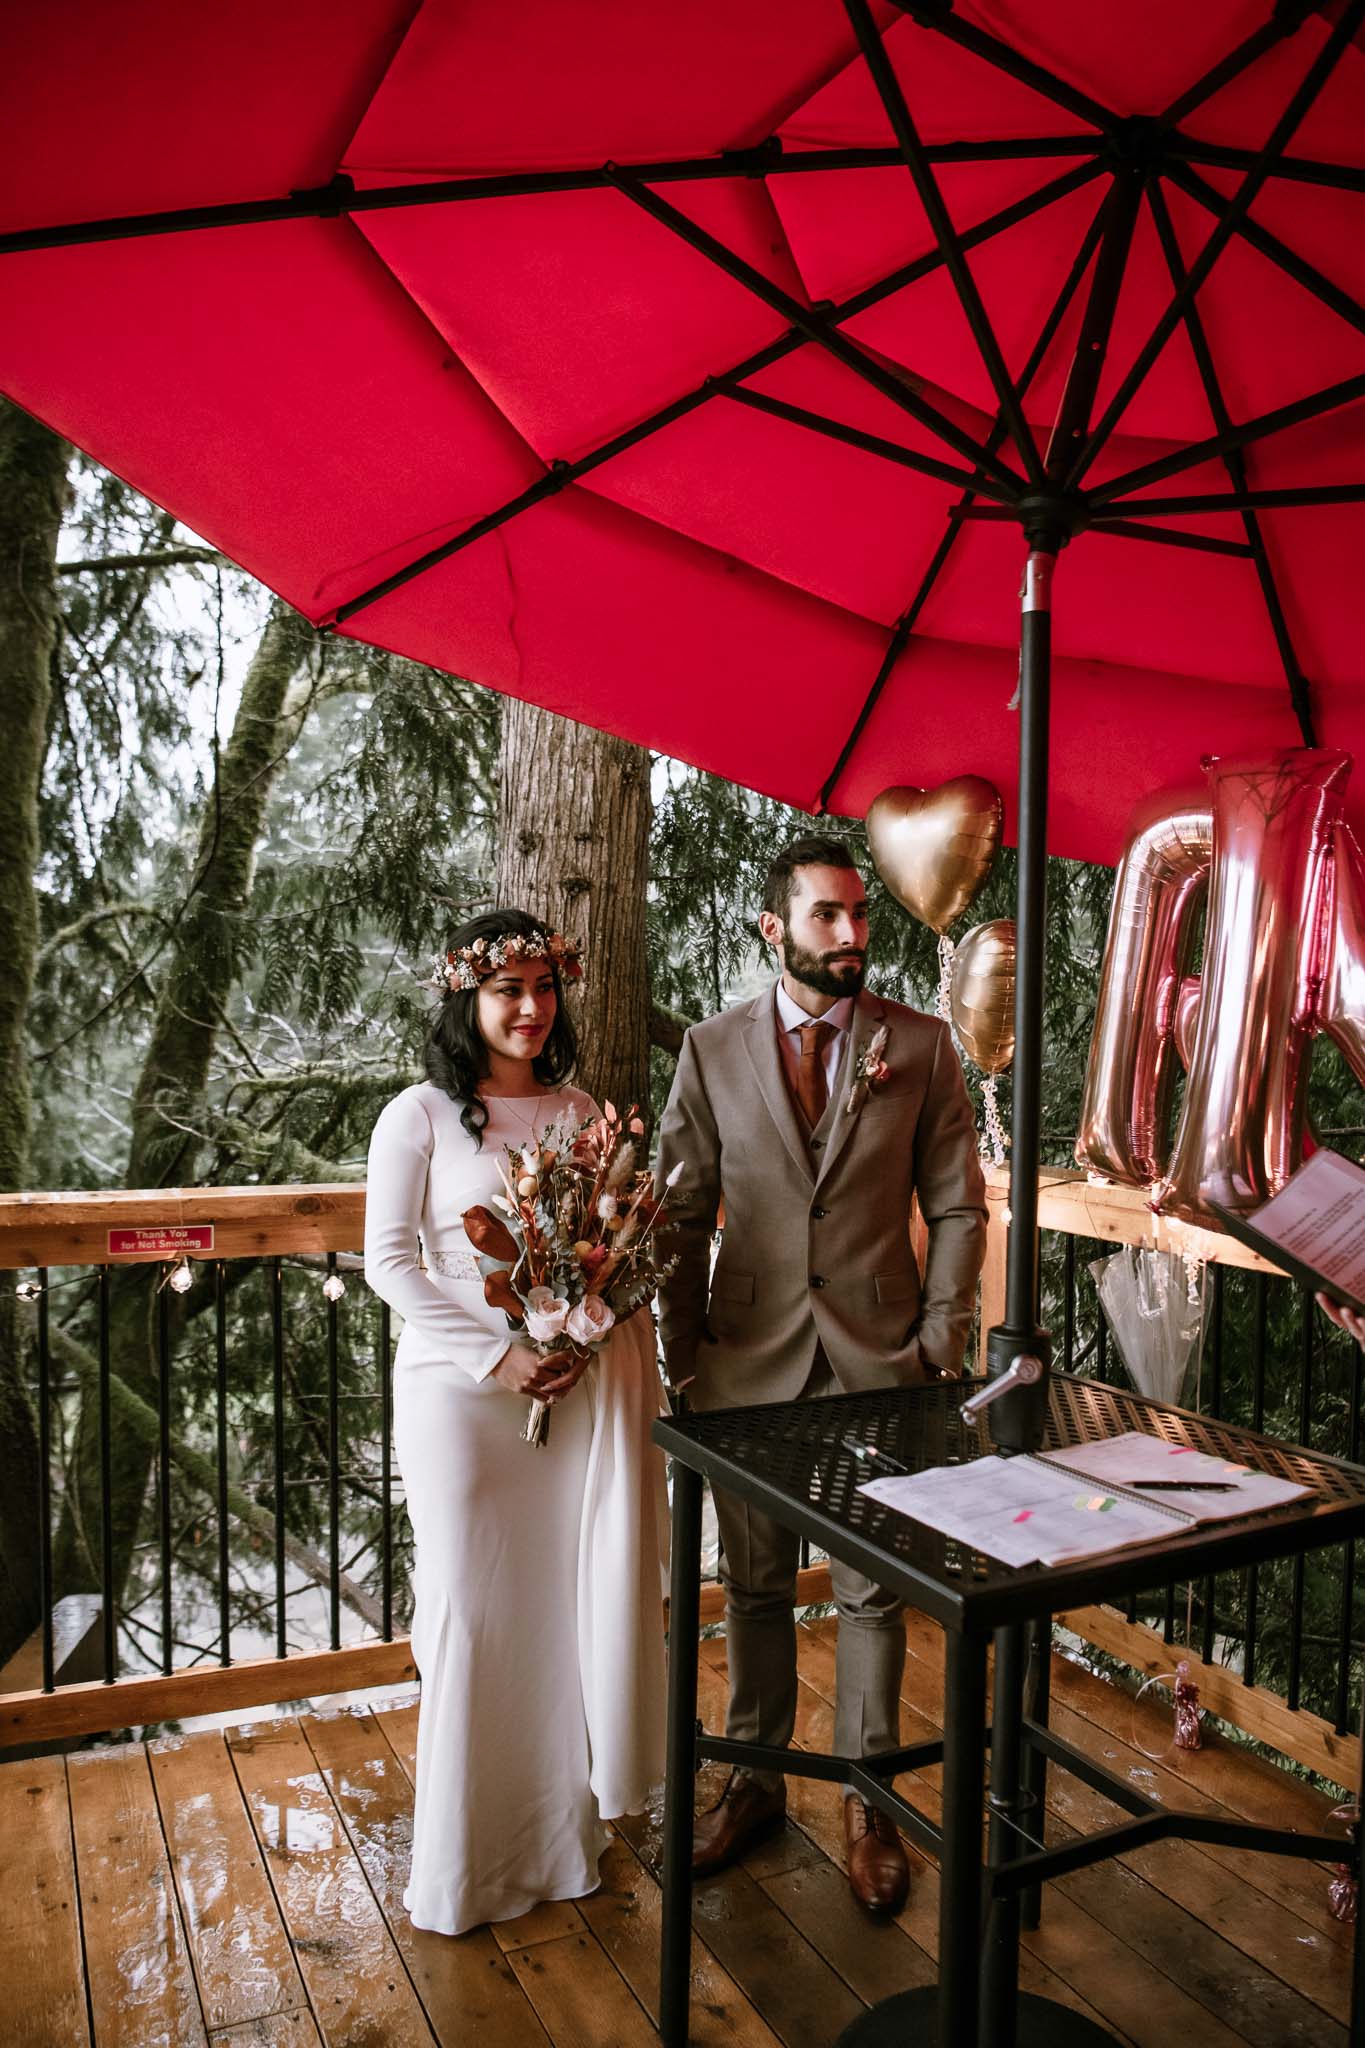 Vancouver Island Elopement Photographers Vendors Weddings Victoria BC